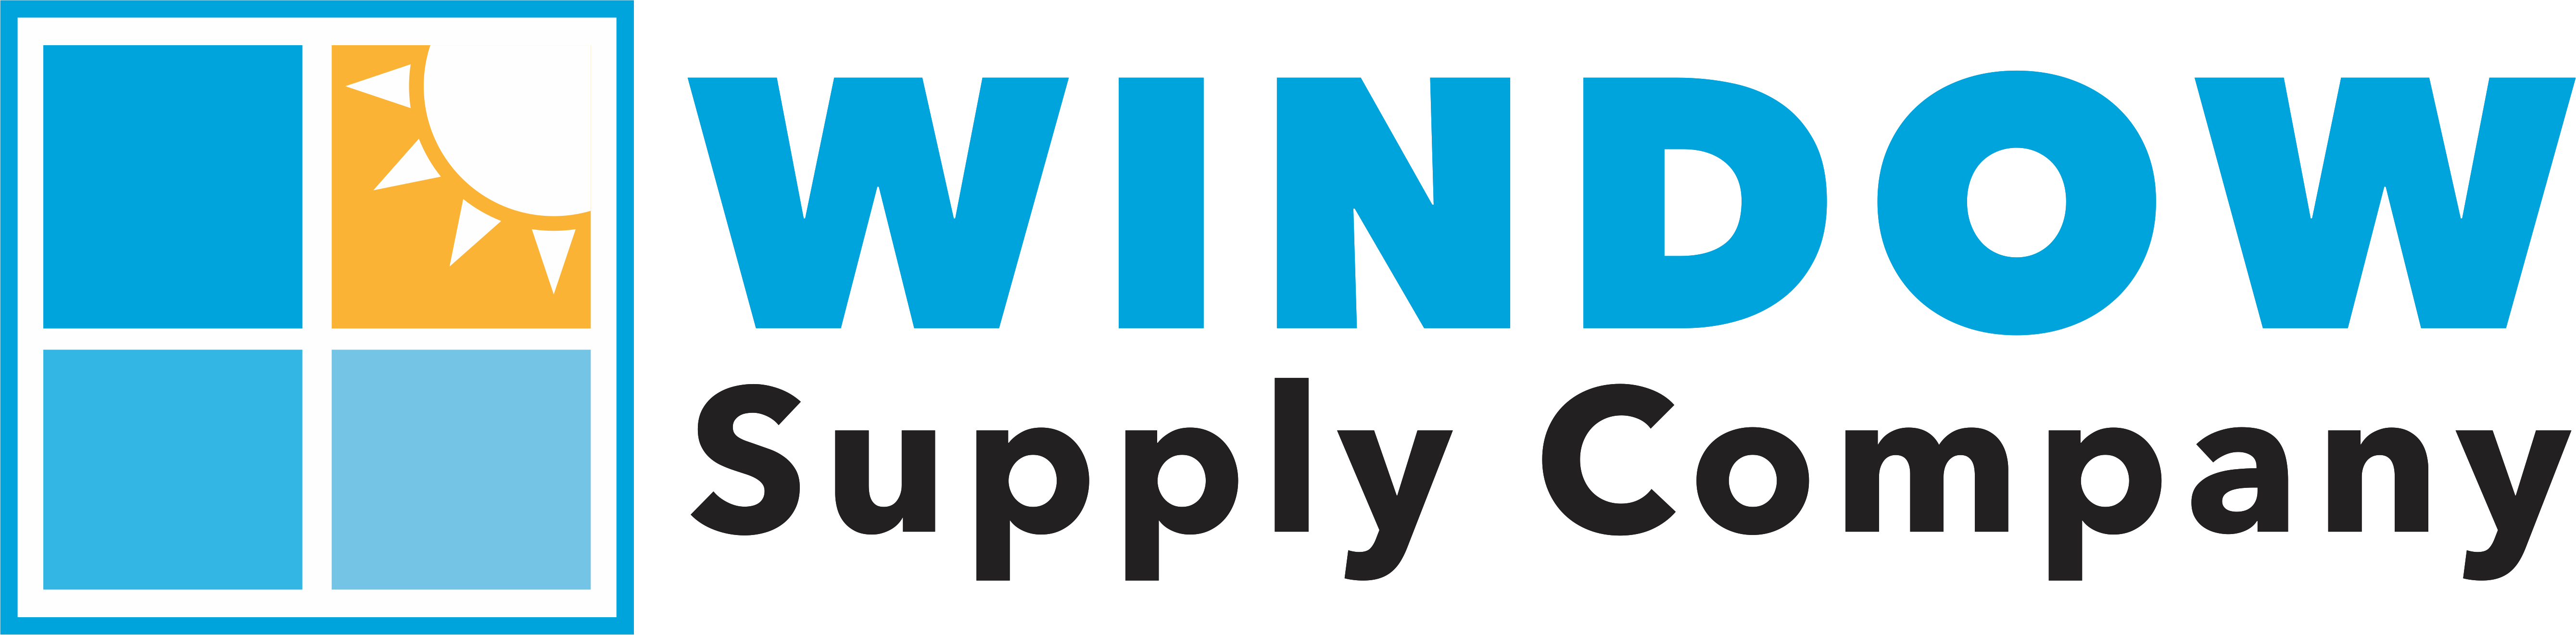 Window Supply Company Ltd